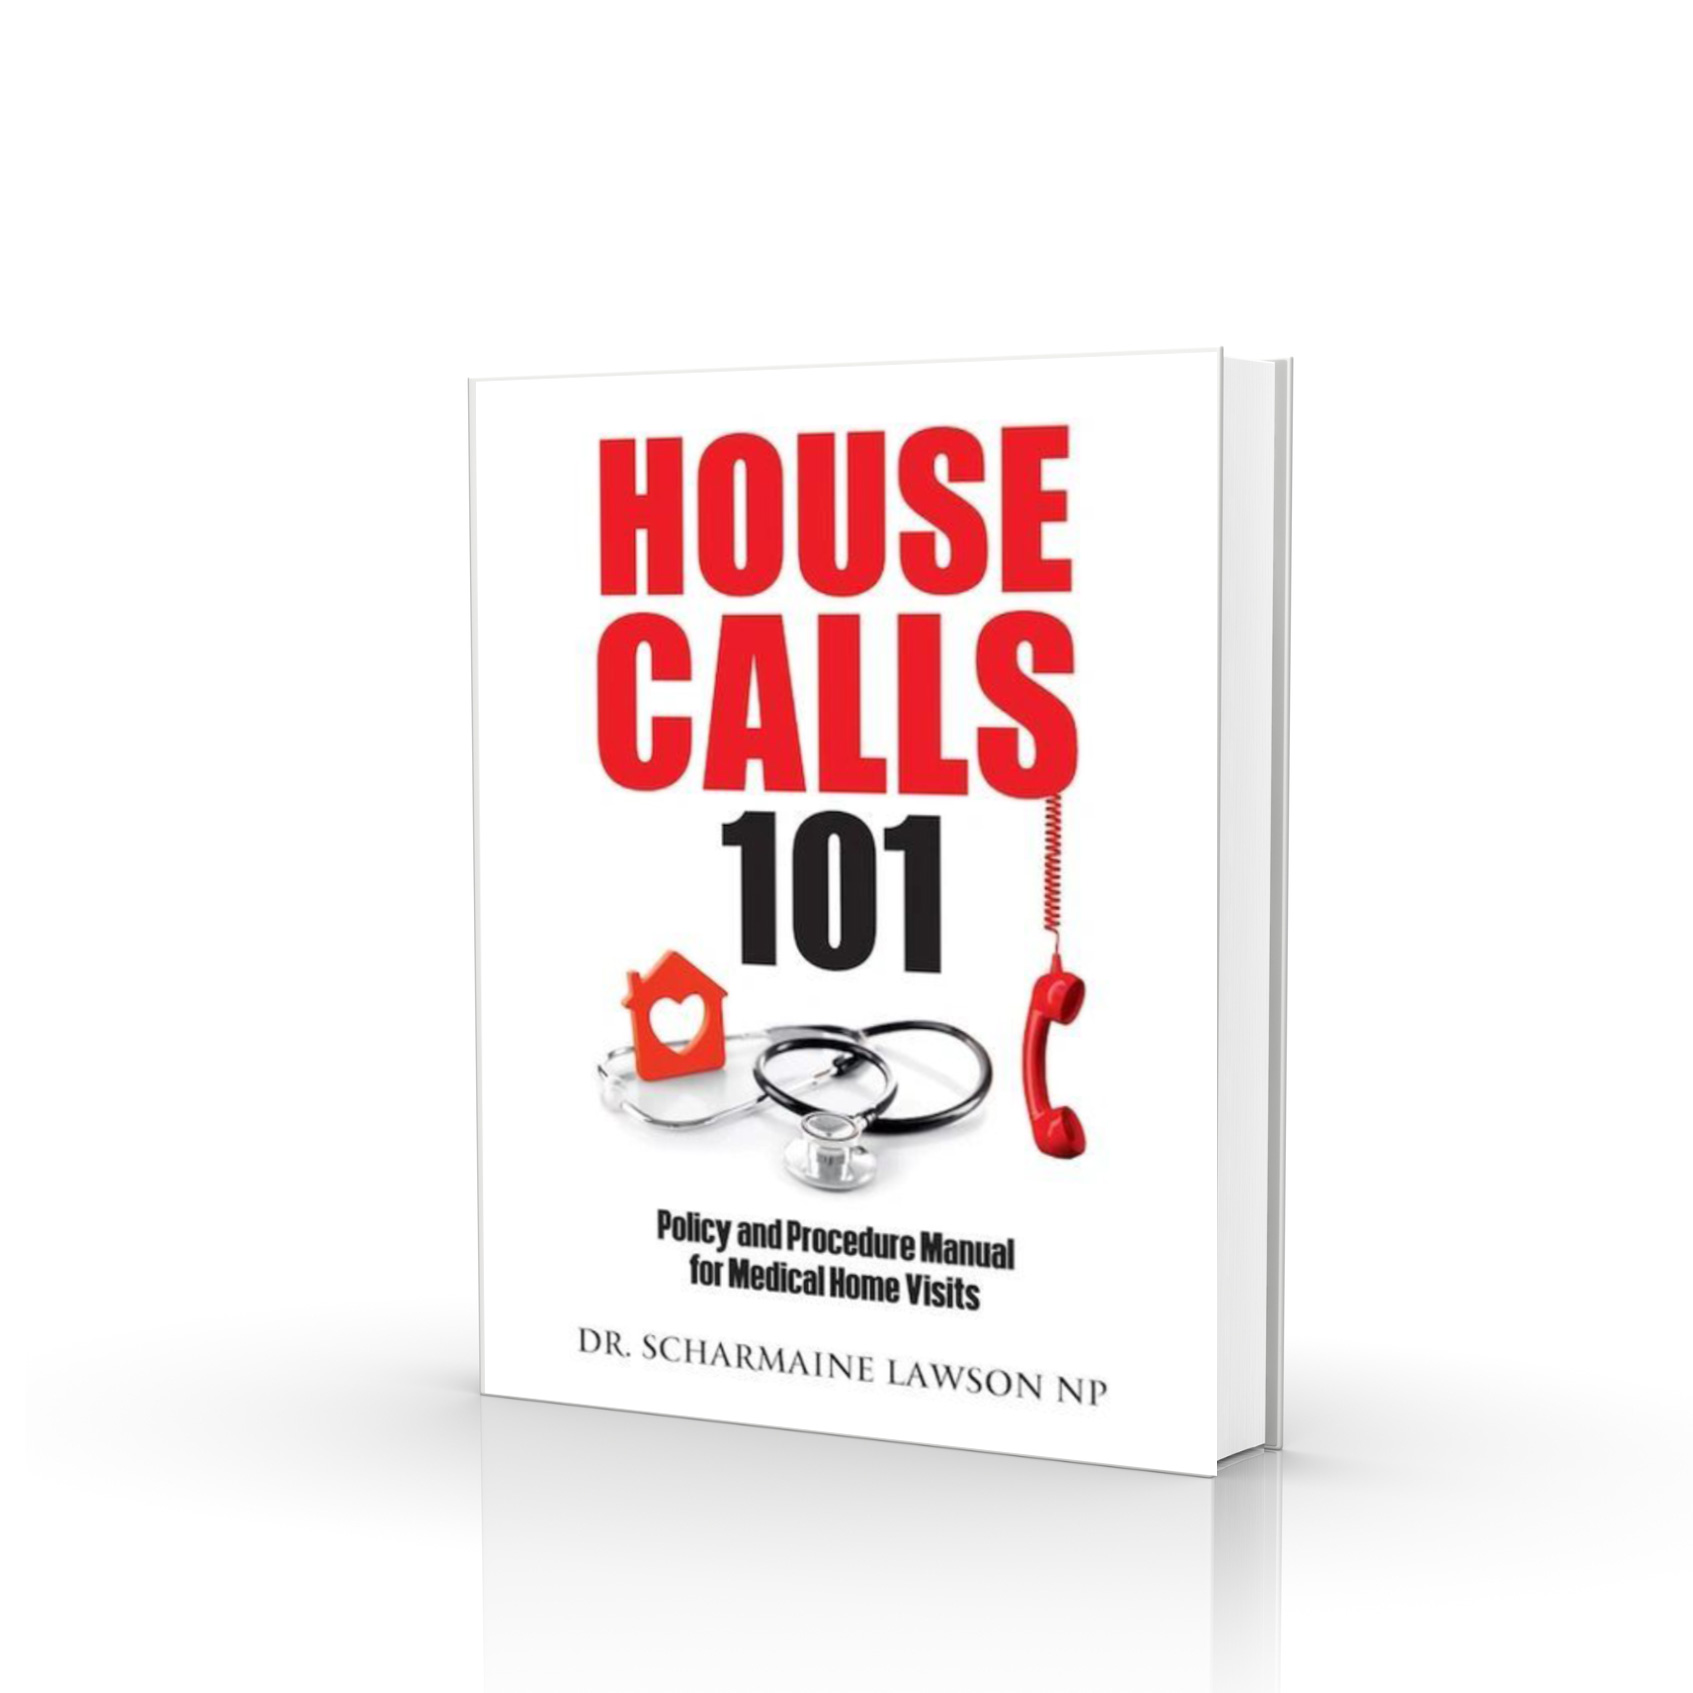 Housecalls 101 Policy and Procedure Manual (ePub)